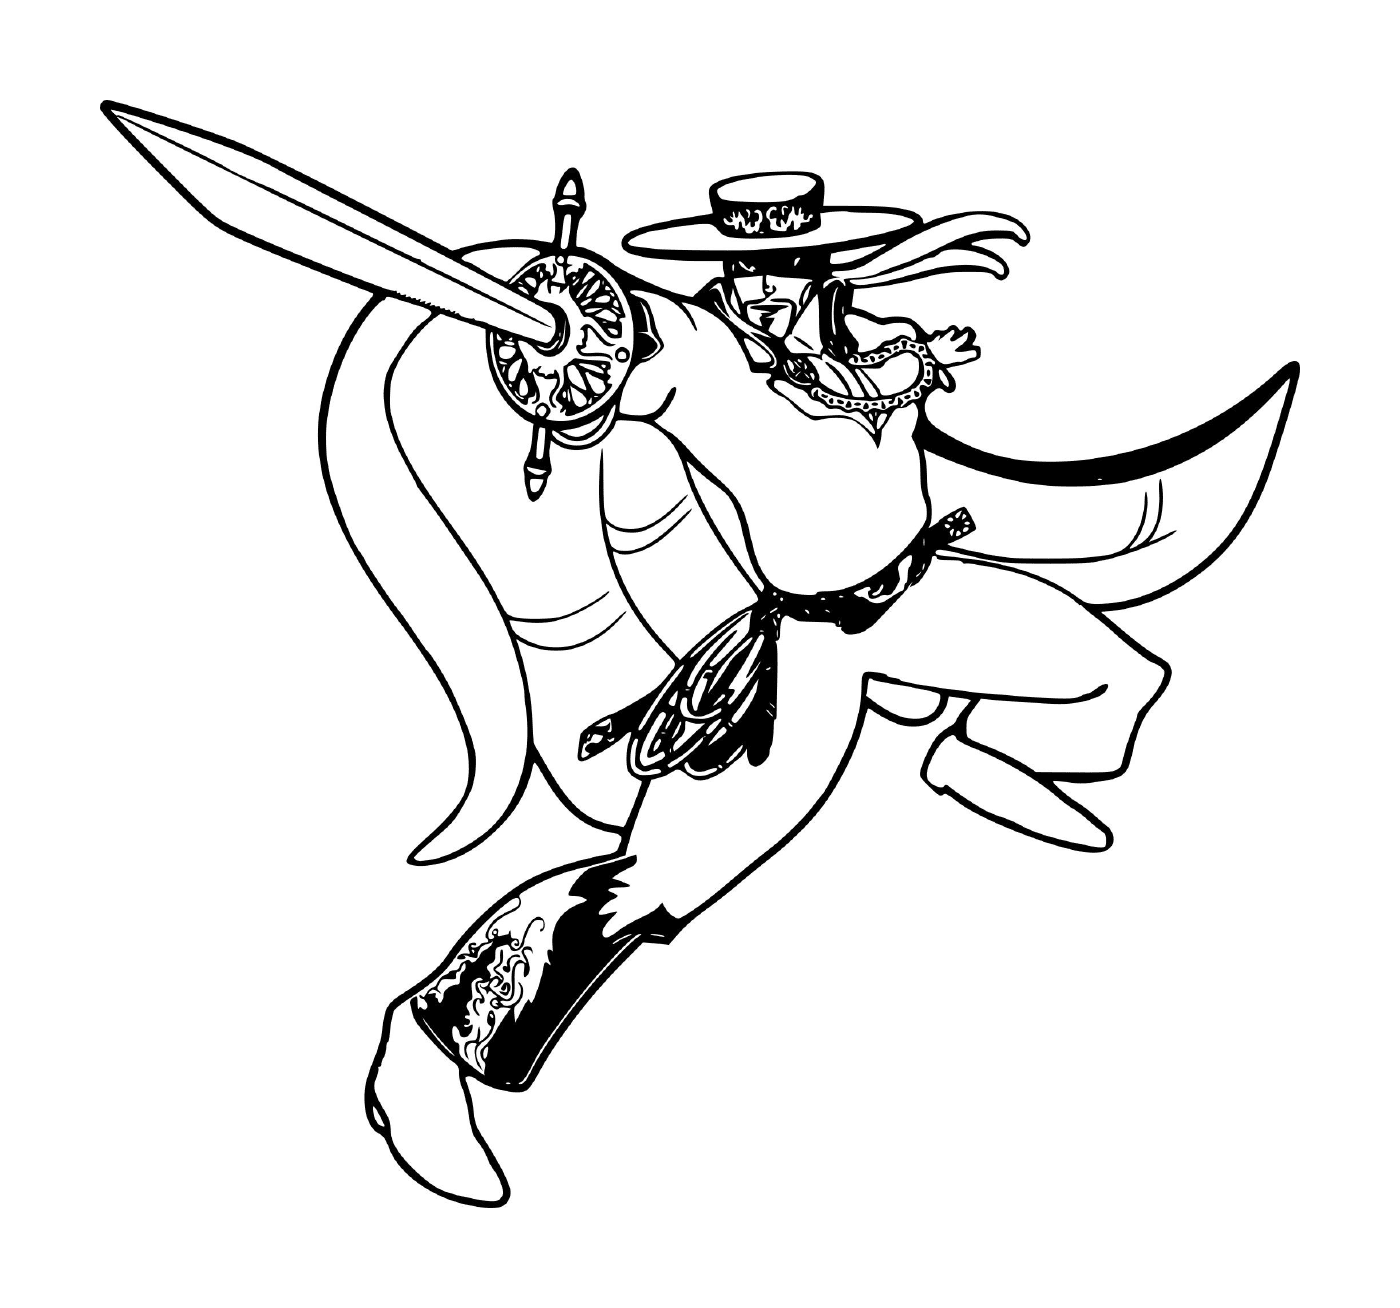  Zorro the masked vigilante fox holding a sword 